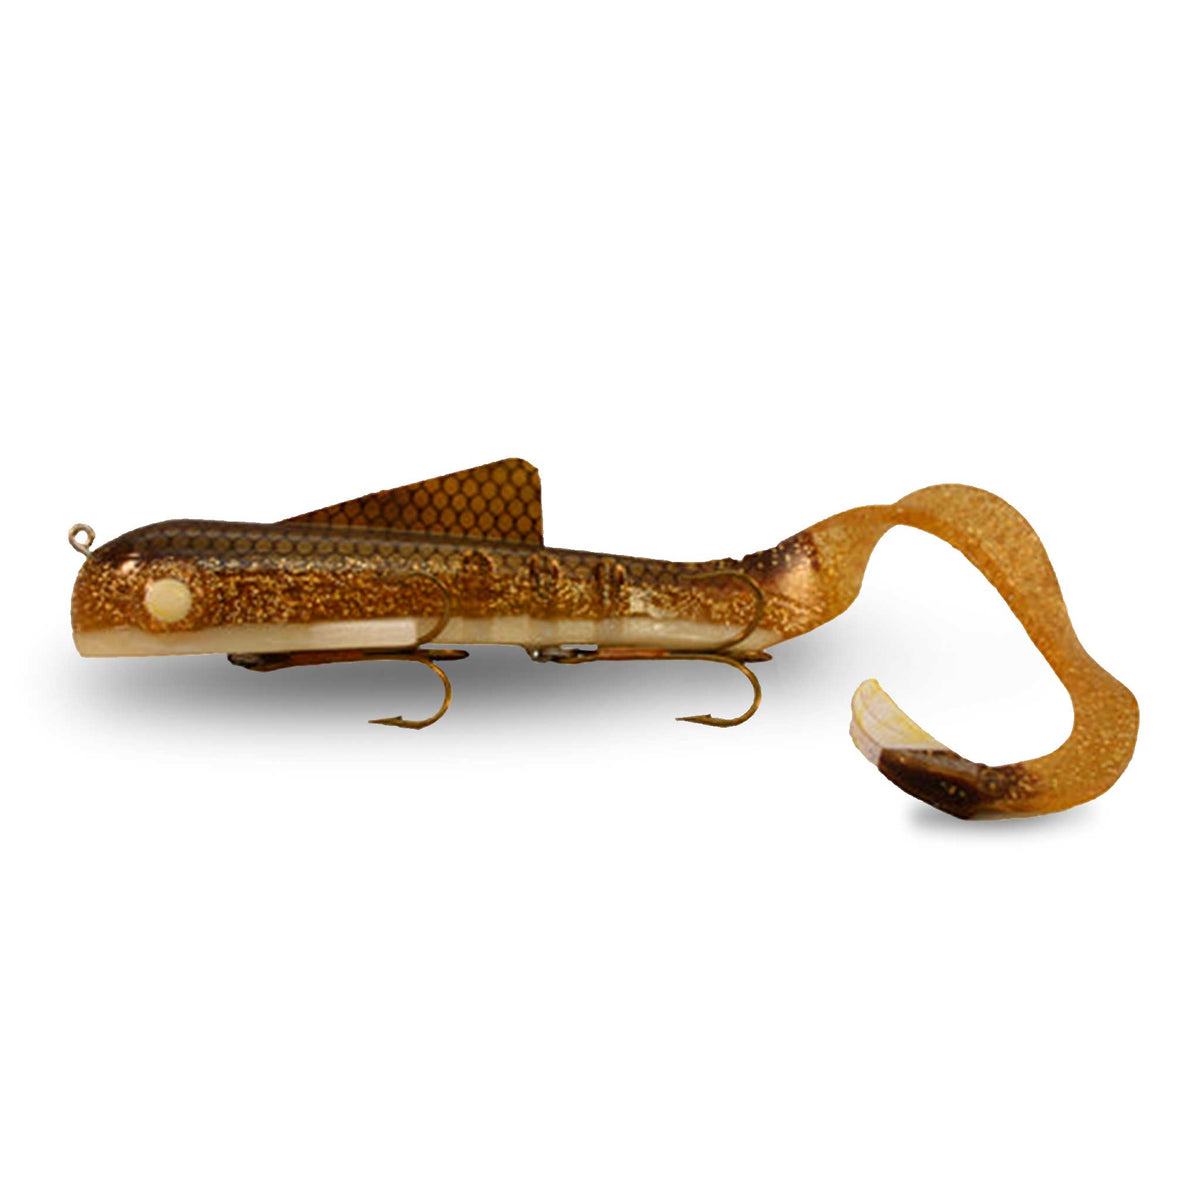  Mizugiwa 12/30cm 115g Pike Musky Dawg Fishing Soft Bait Lure, Fishing Tackle Pack of 2 : Sports & Outdoors